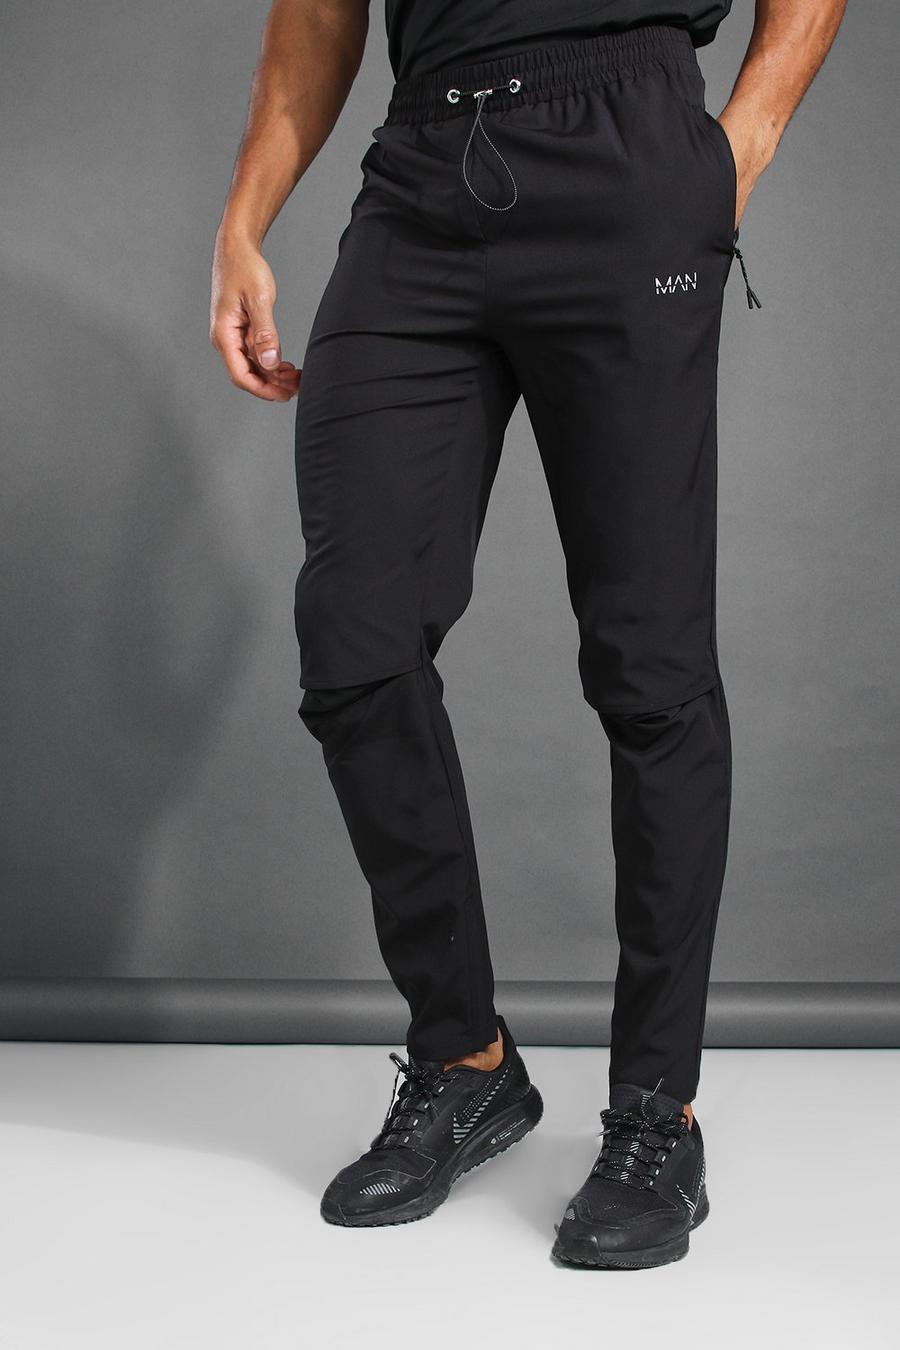 Pantalón deportivo MAN Active ajustado, Negro black